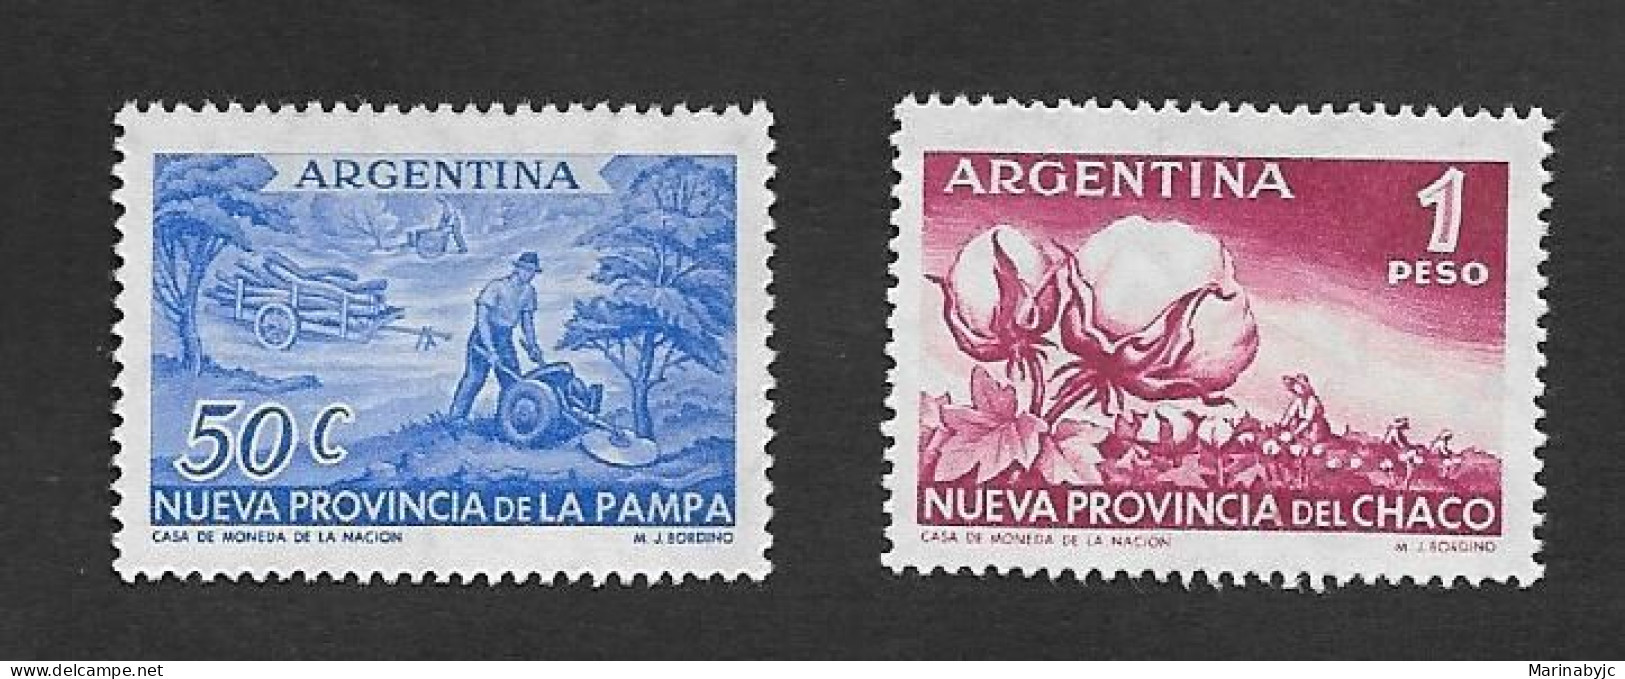 EL)1956 ARGENTINA, NEW PROVINCE OF PAMPA 50C & DEL CHACO 1P, MNH - Oblitérés